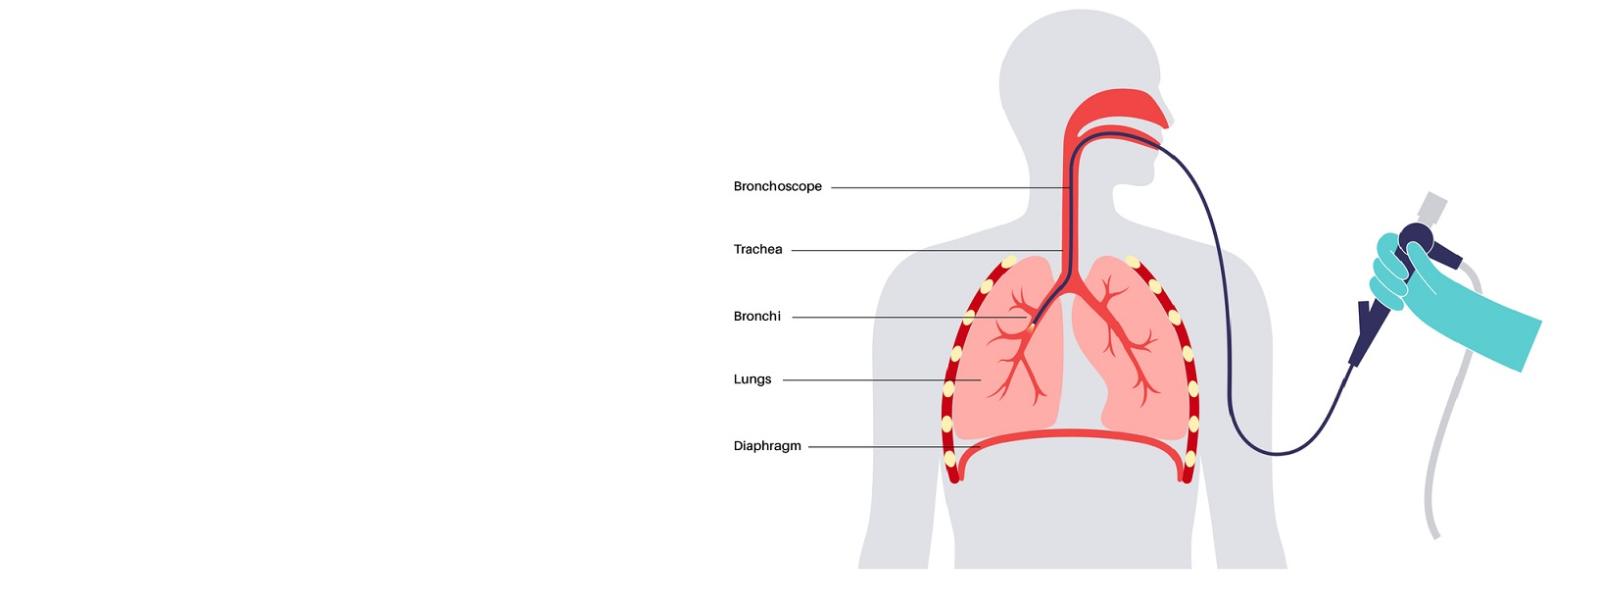 Pulmonary Endoscopy diagram